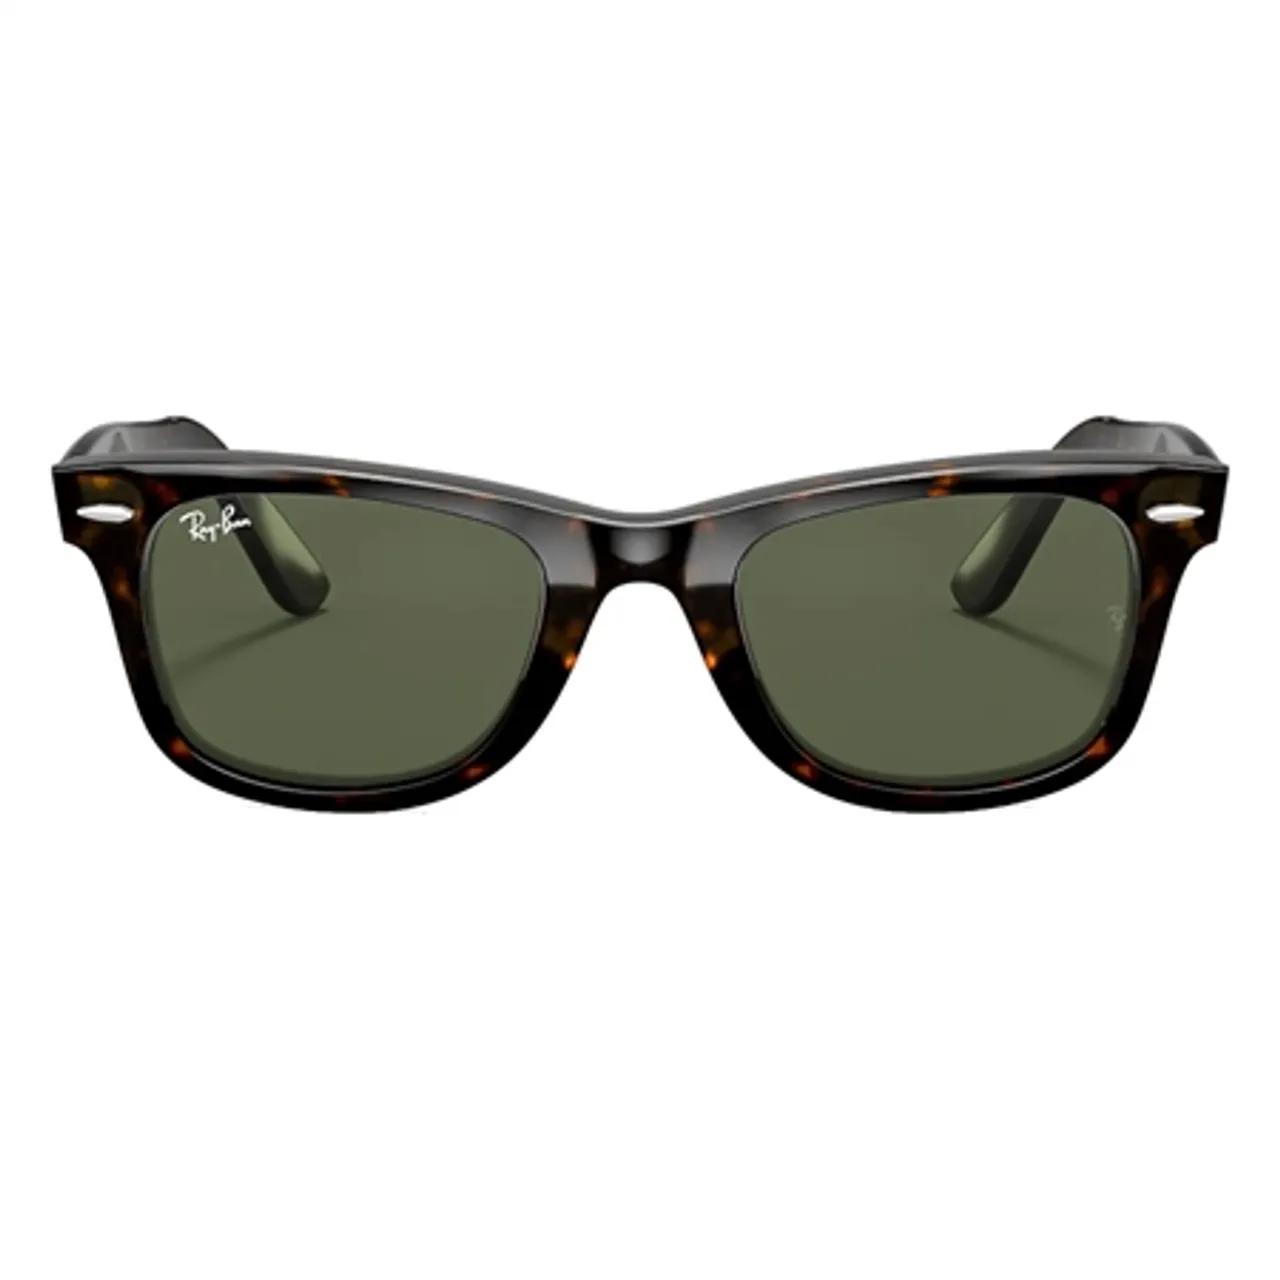 Ray-Ban Original Wayfarer Classics Sunglasses - Tortoise